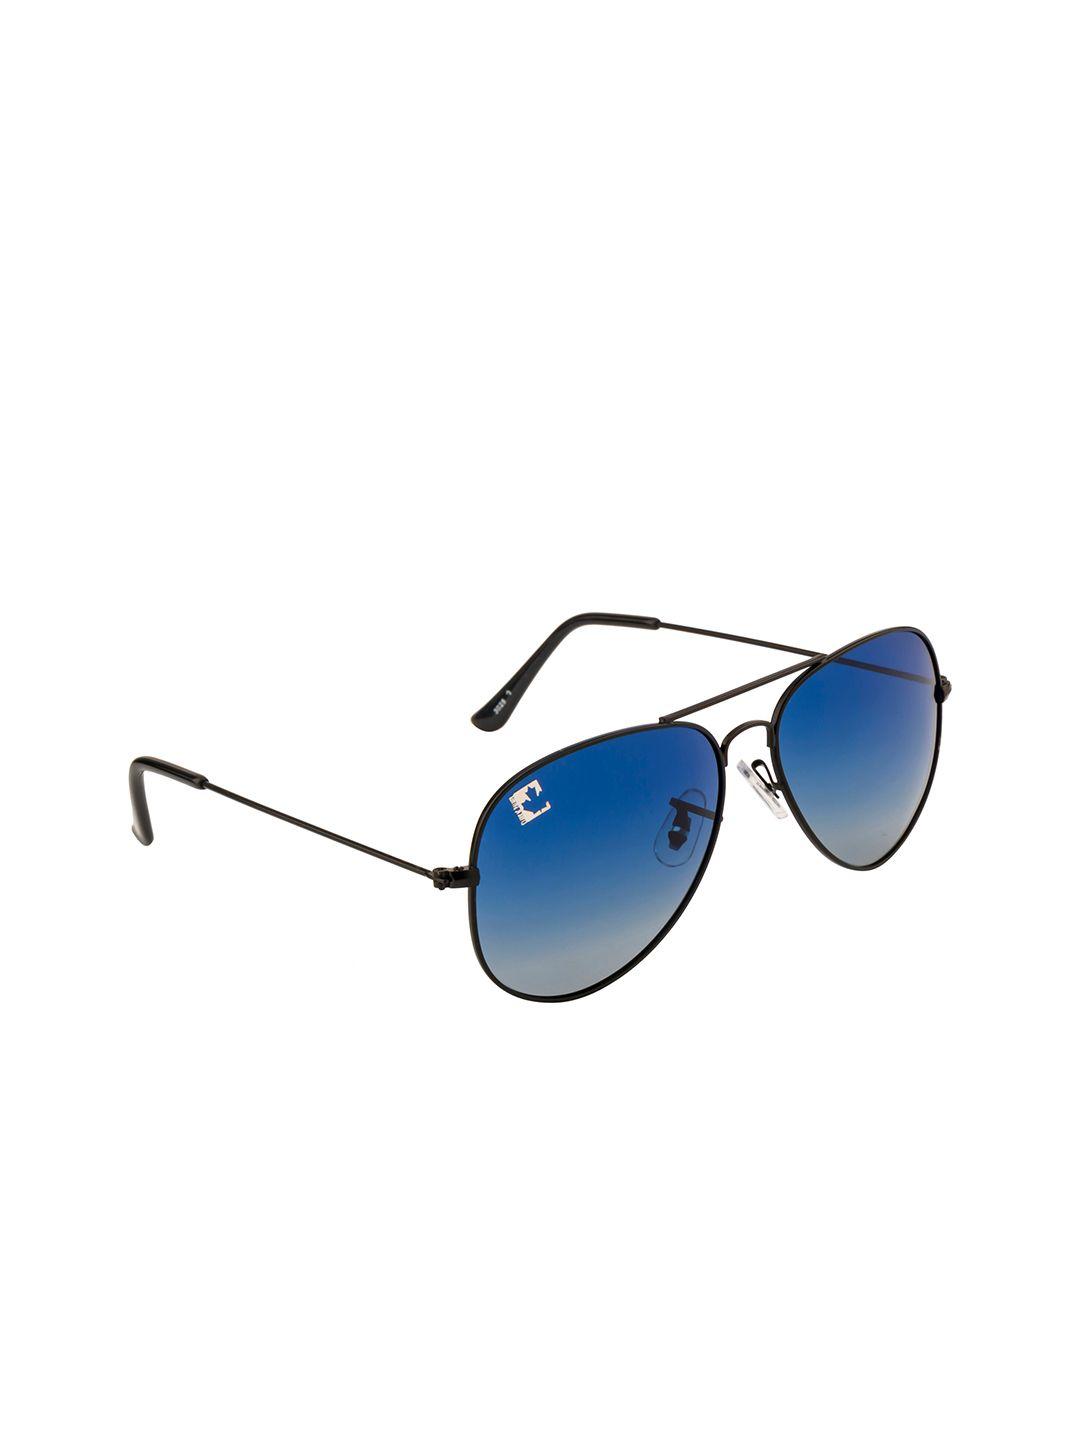 clark n palmer unisex blue lens & black aviator sunglasses with polarised and uv protected lens